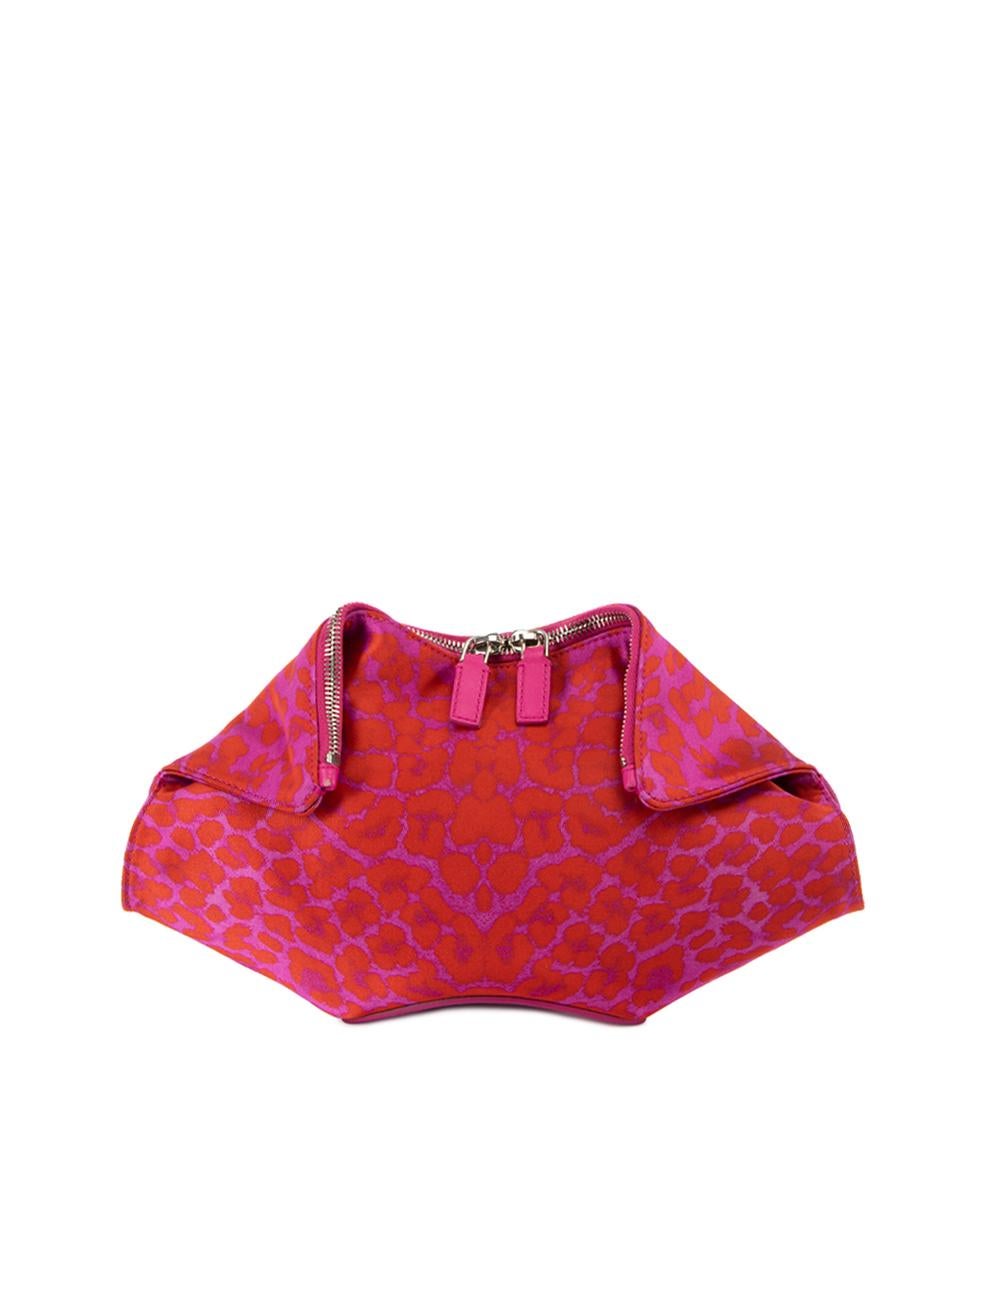 Pre-Loved Alexander McQueen Women's Pink & Red Leopard Print De Manta Clutch Bag In Excellent Condition In London, GB